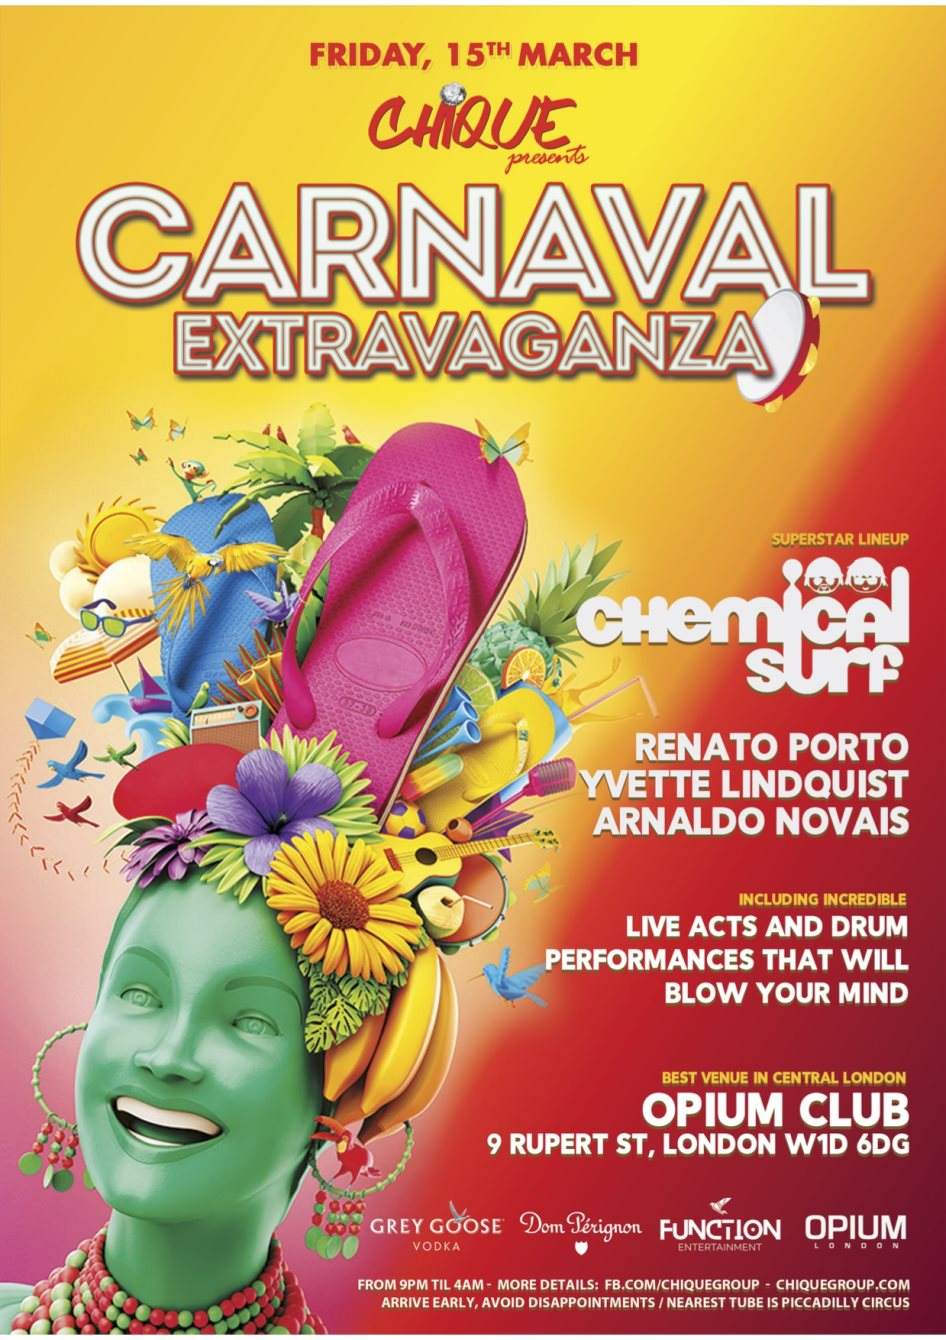 Chique - Carnaval Extravaganza/ Chemical Surf Long set - Página frontal